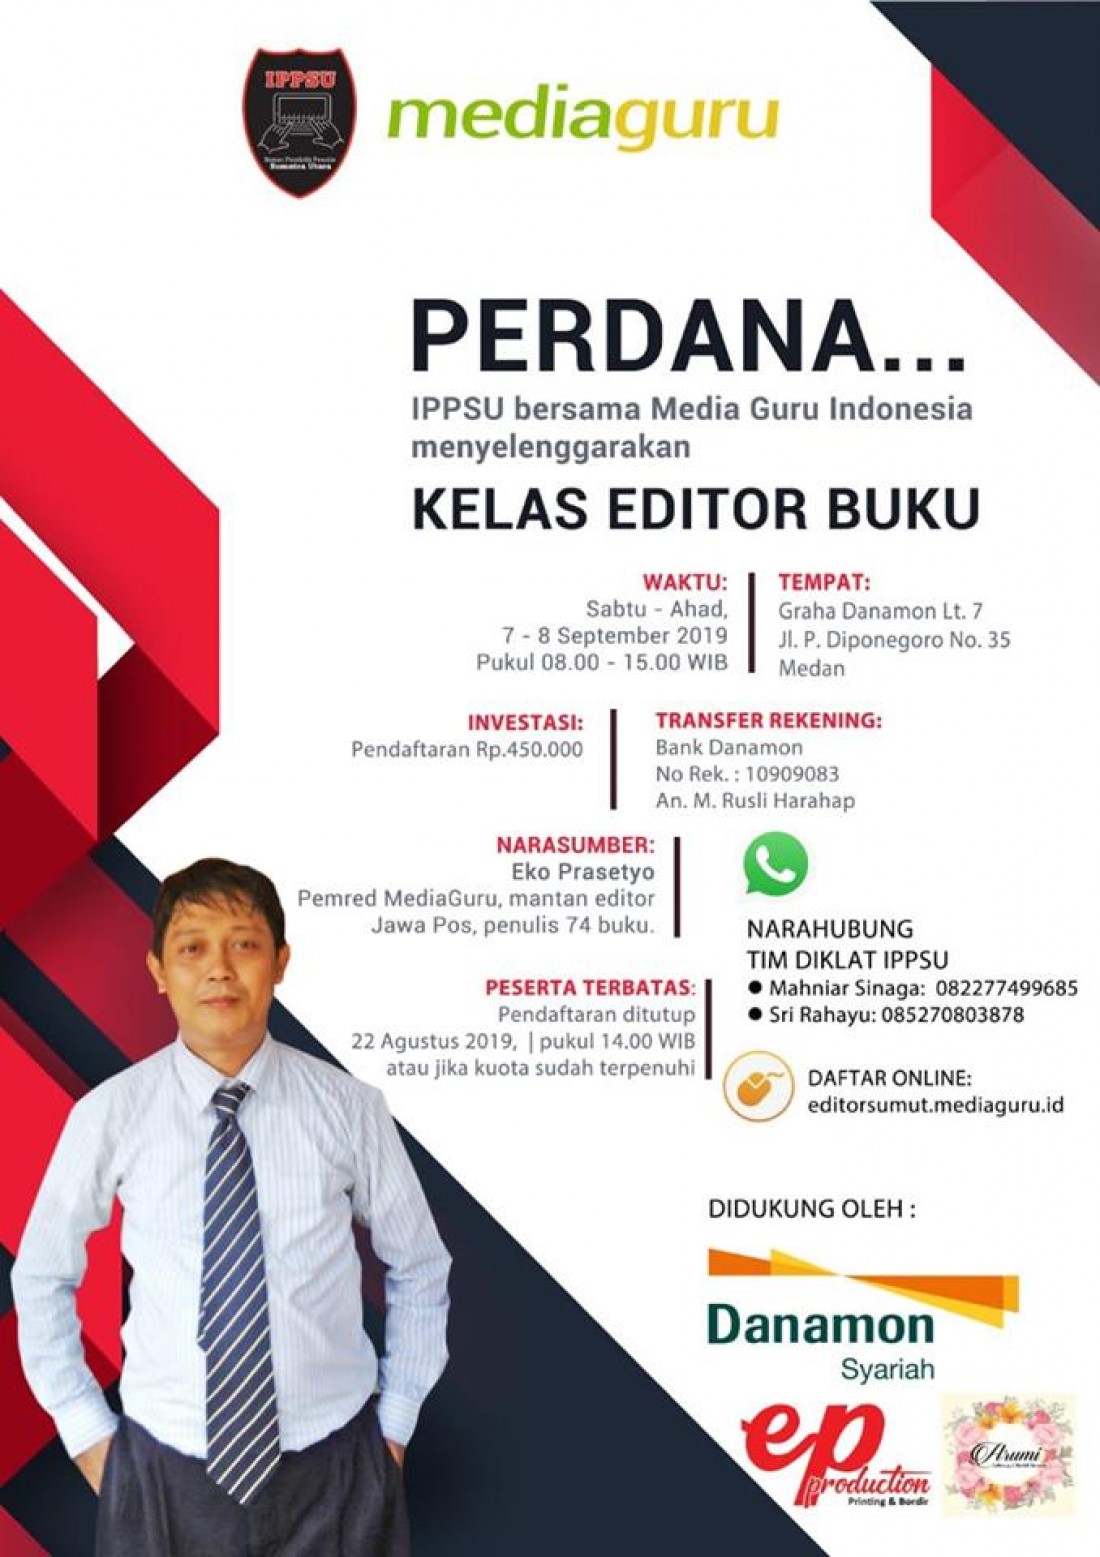 Kelas Editor Buku MediaGuru IPPSU (Medan, 7 - 8 September 2019)